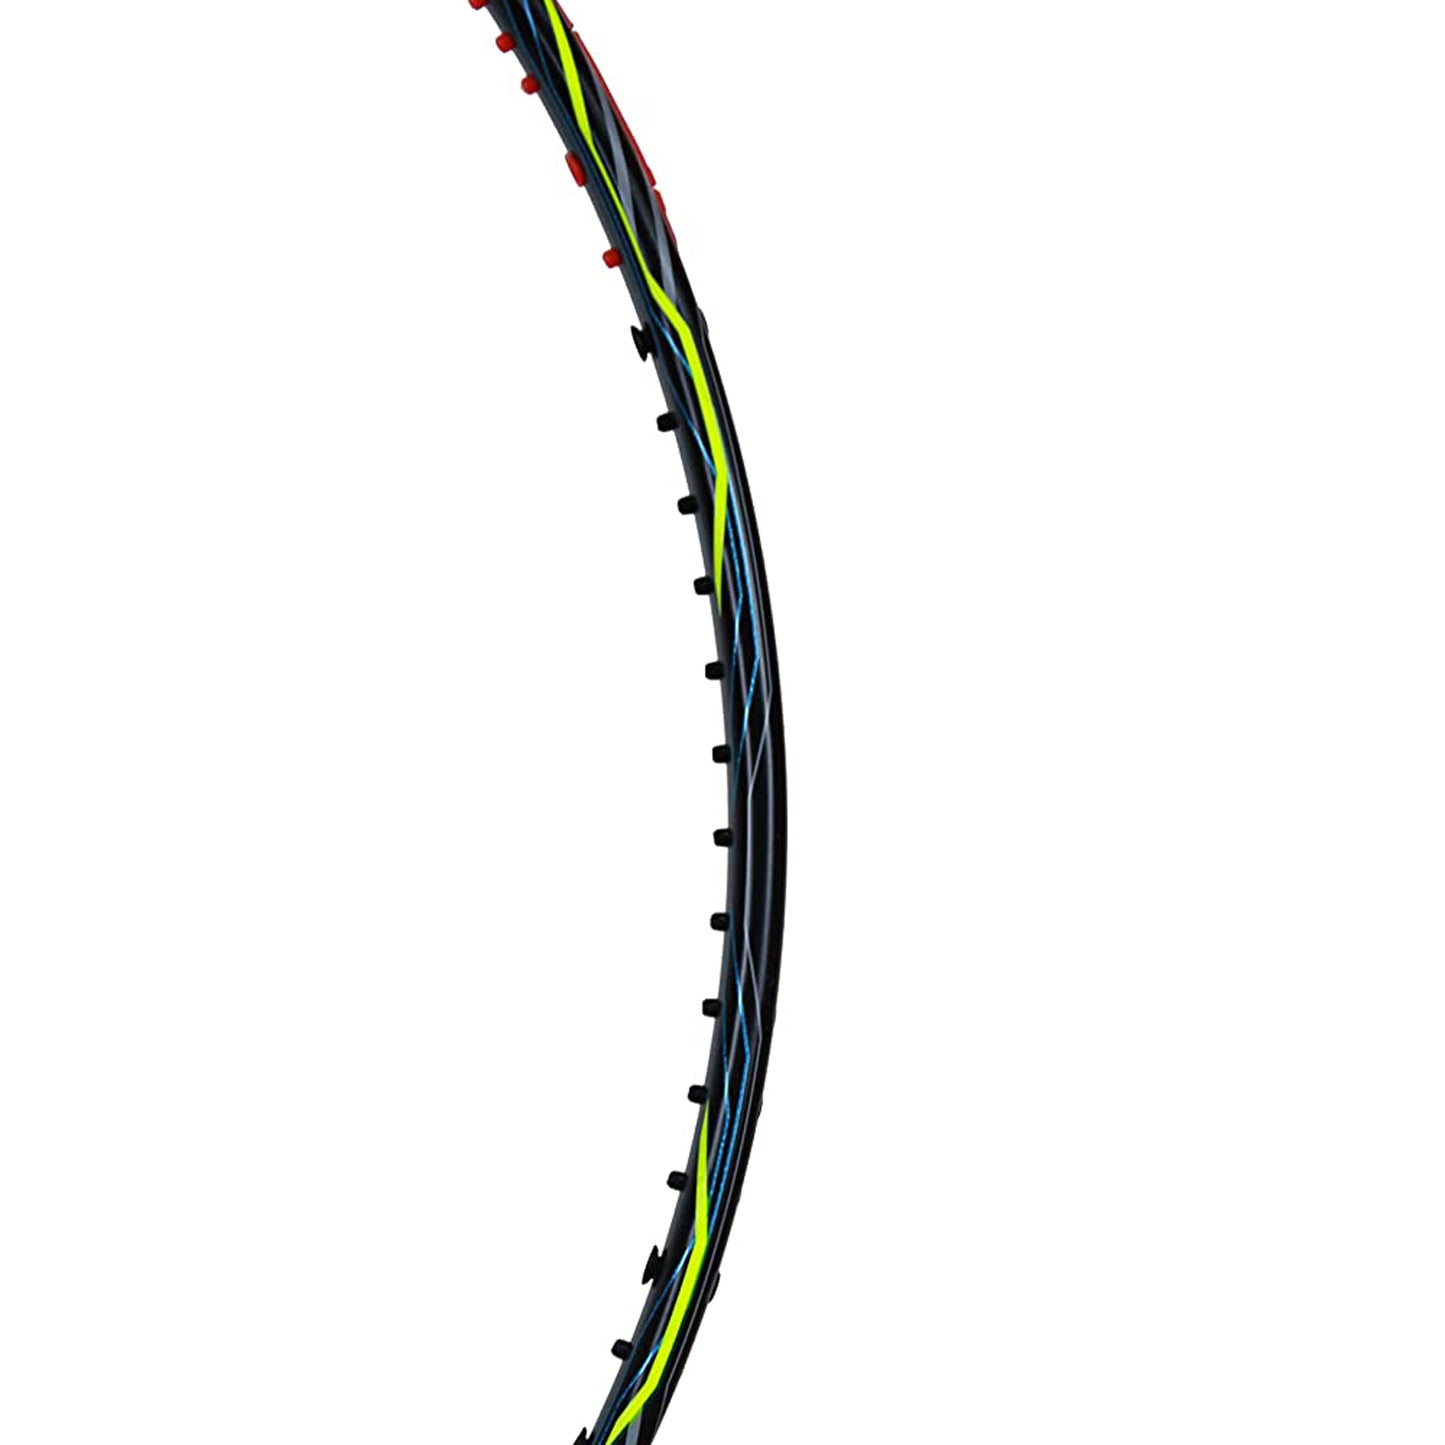 Maxbolt Galant Force Unstrung Badminton Racquet, Black/Blue - Best Price online Prokicksports.com